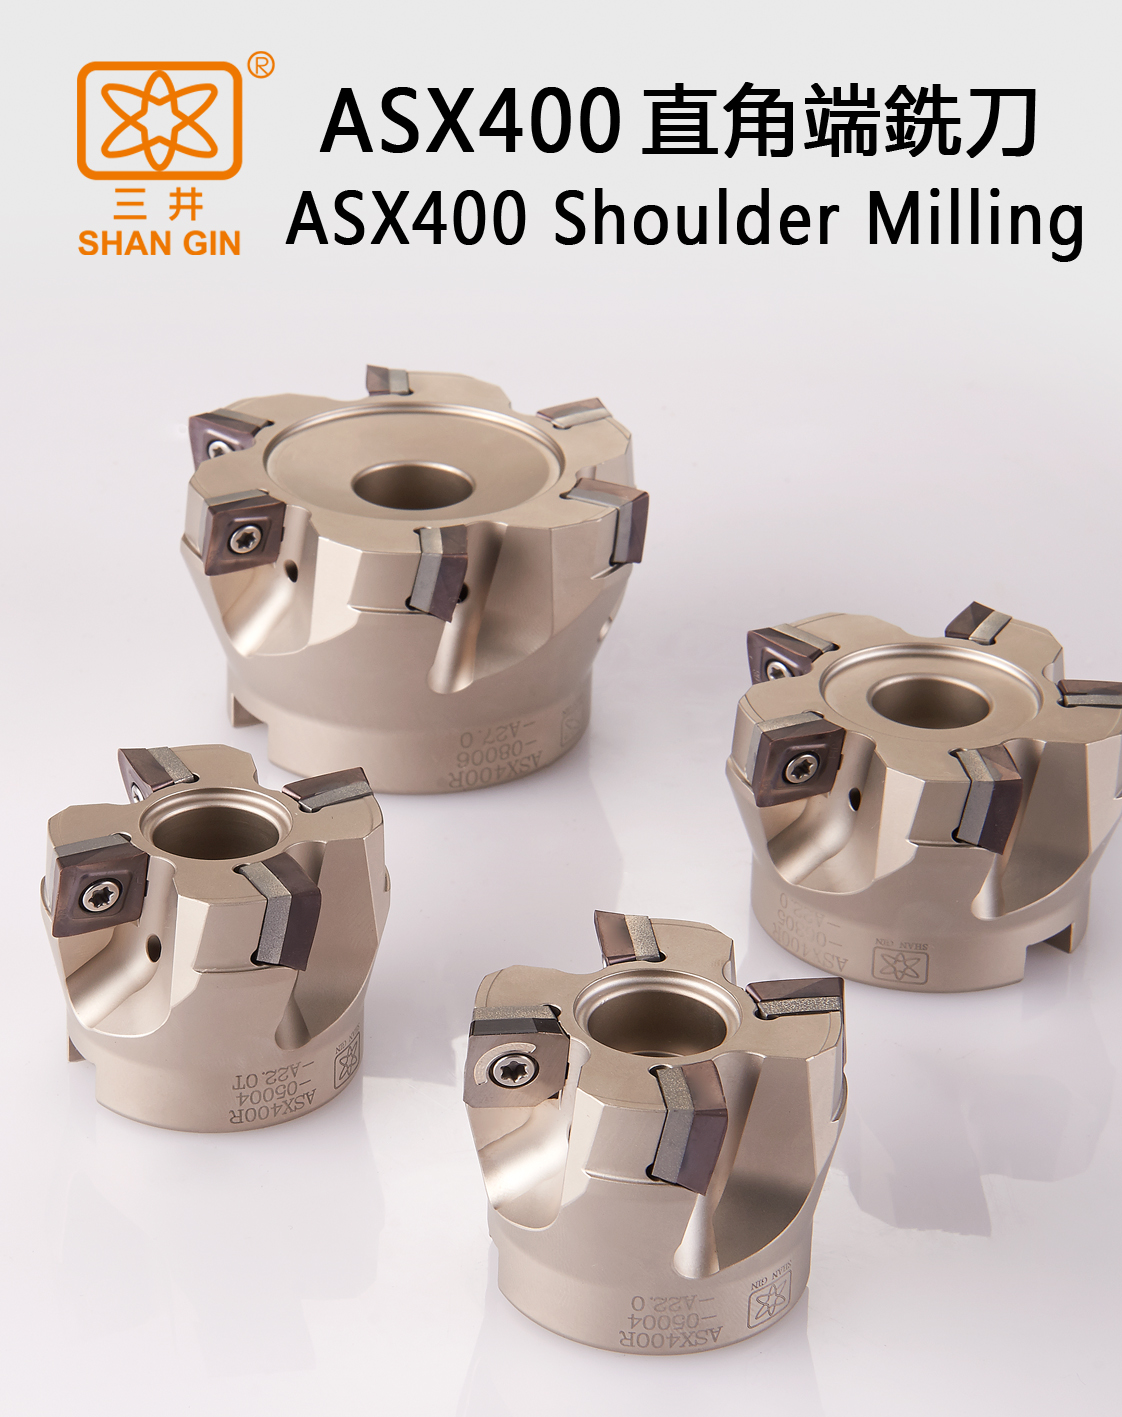 Products|ASX400 Shoulder Milling